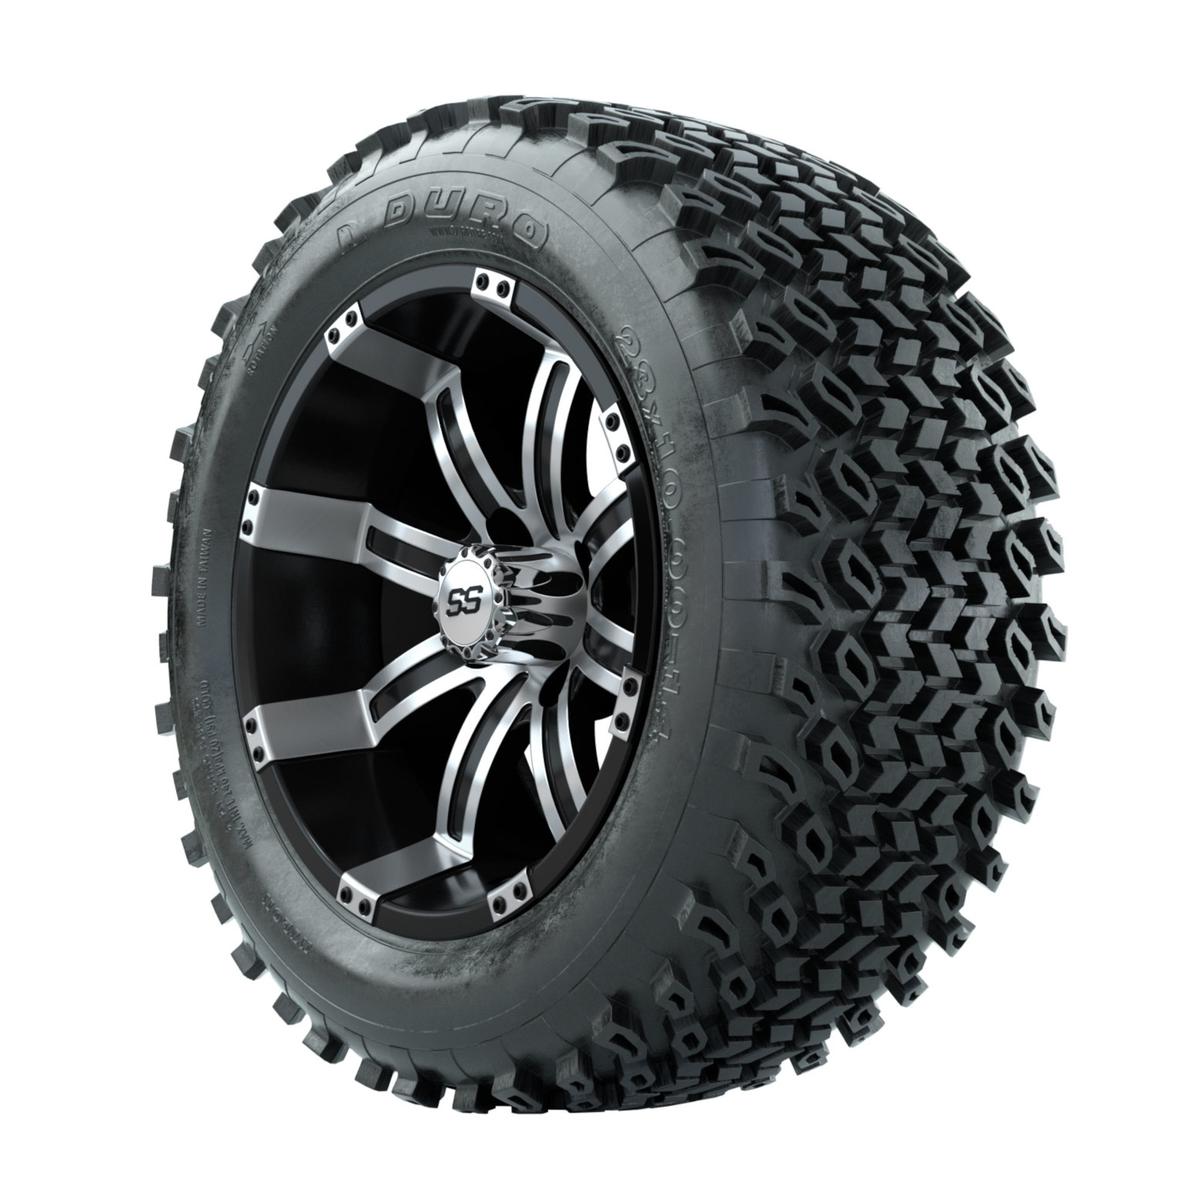 GTW Tempest Machined/Black 14 Inch Wheels on 23x10-14 Duro Desert All Terrain Tires - Full Set